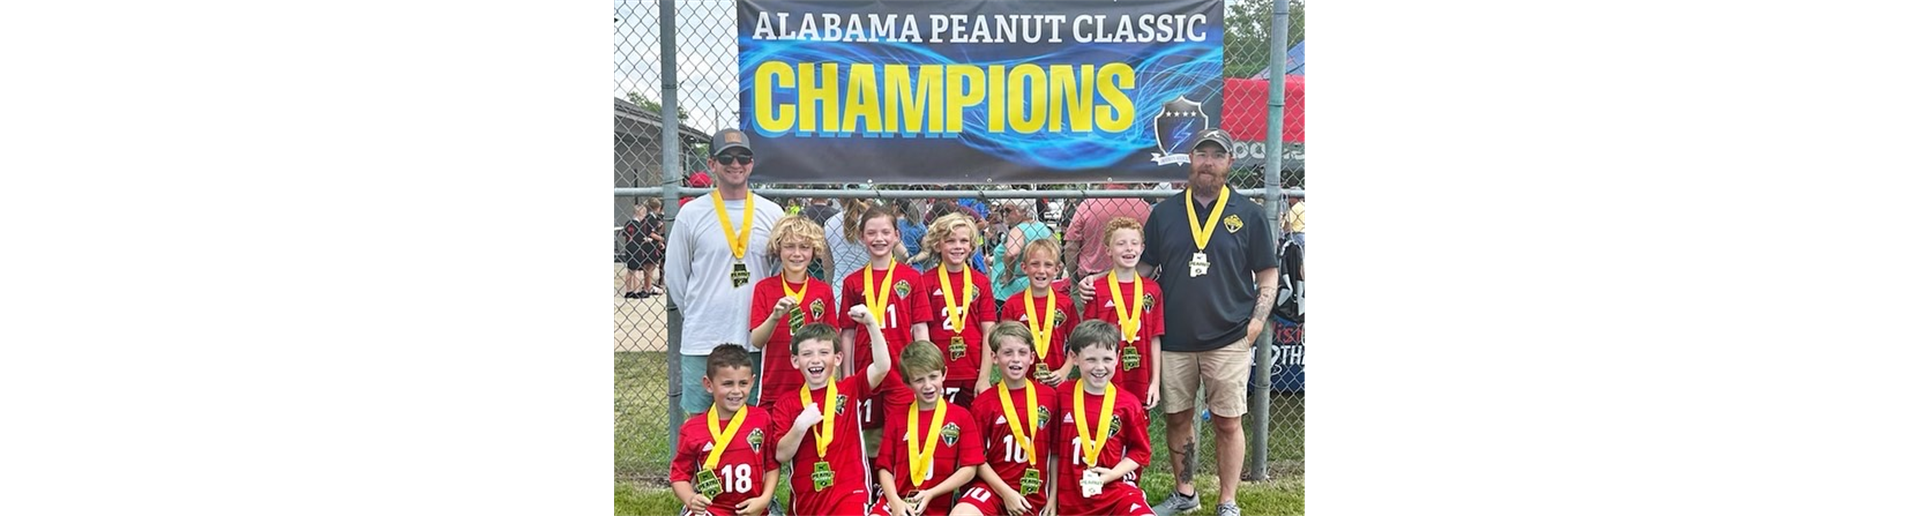 Alabama Peanut Classic 9U Champions